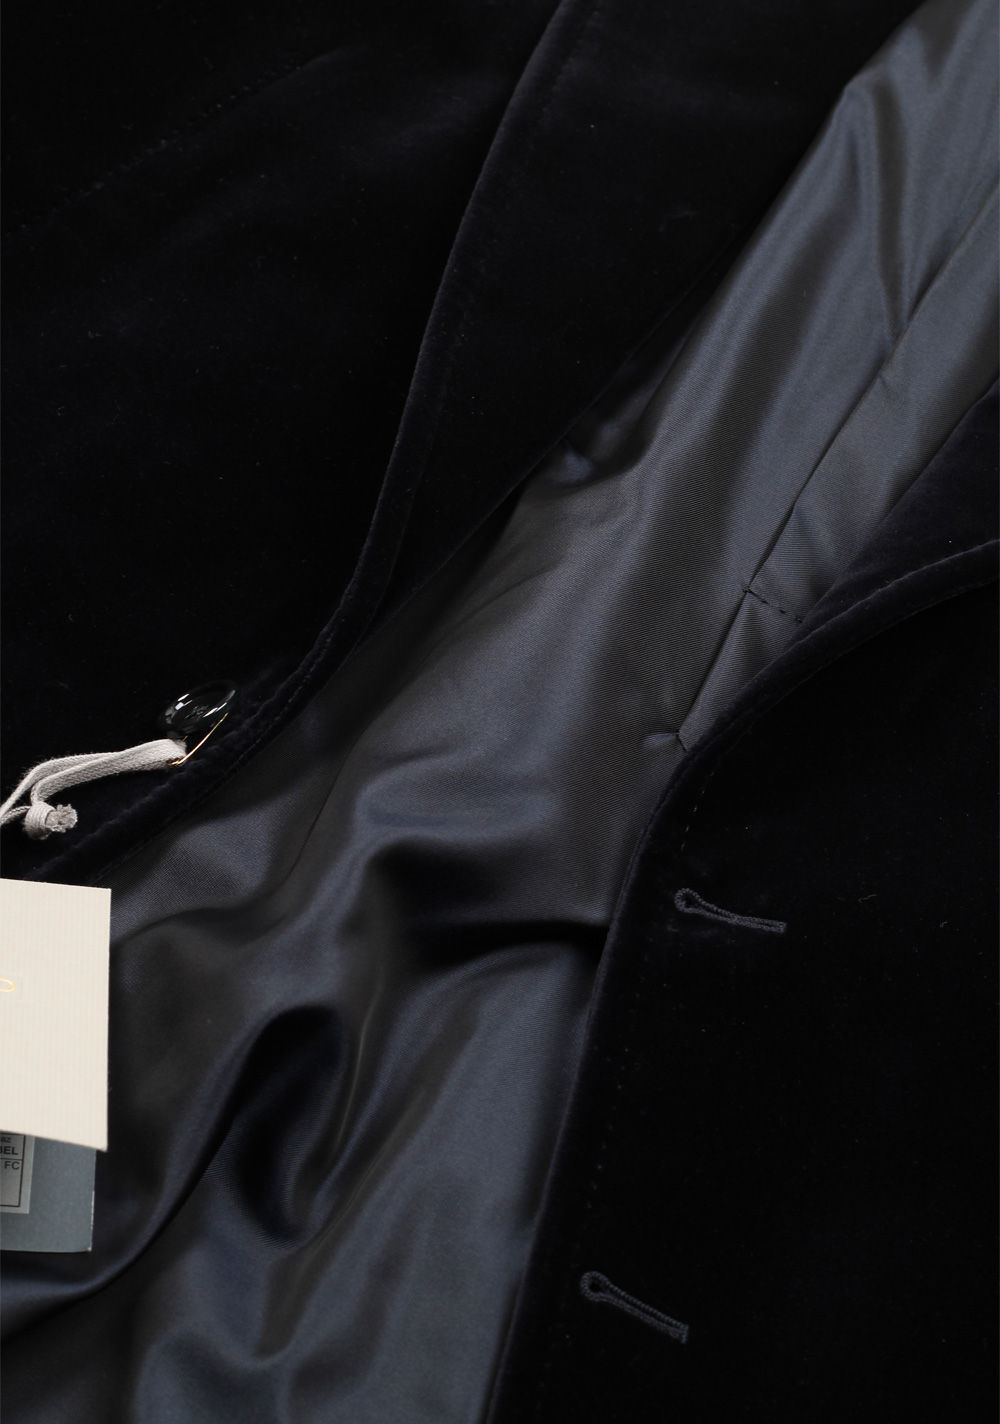 TOM FORD Shelton Velvet Black Sport Coat Size 52 / 42R U.S. Cotton | Costume Limité